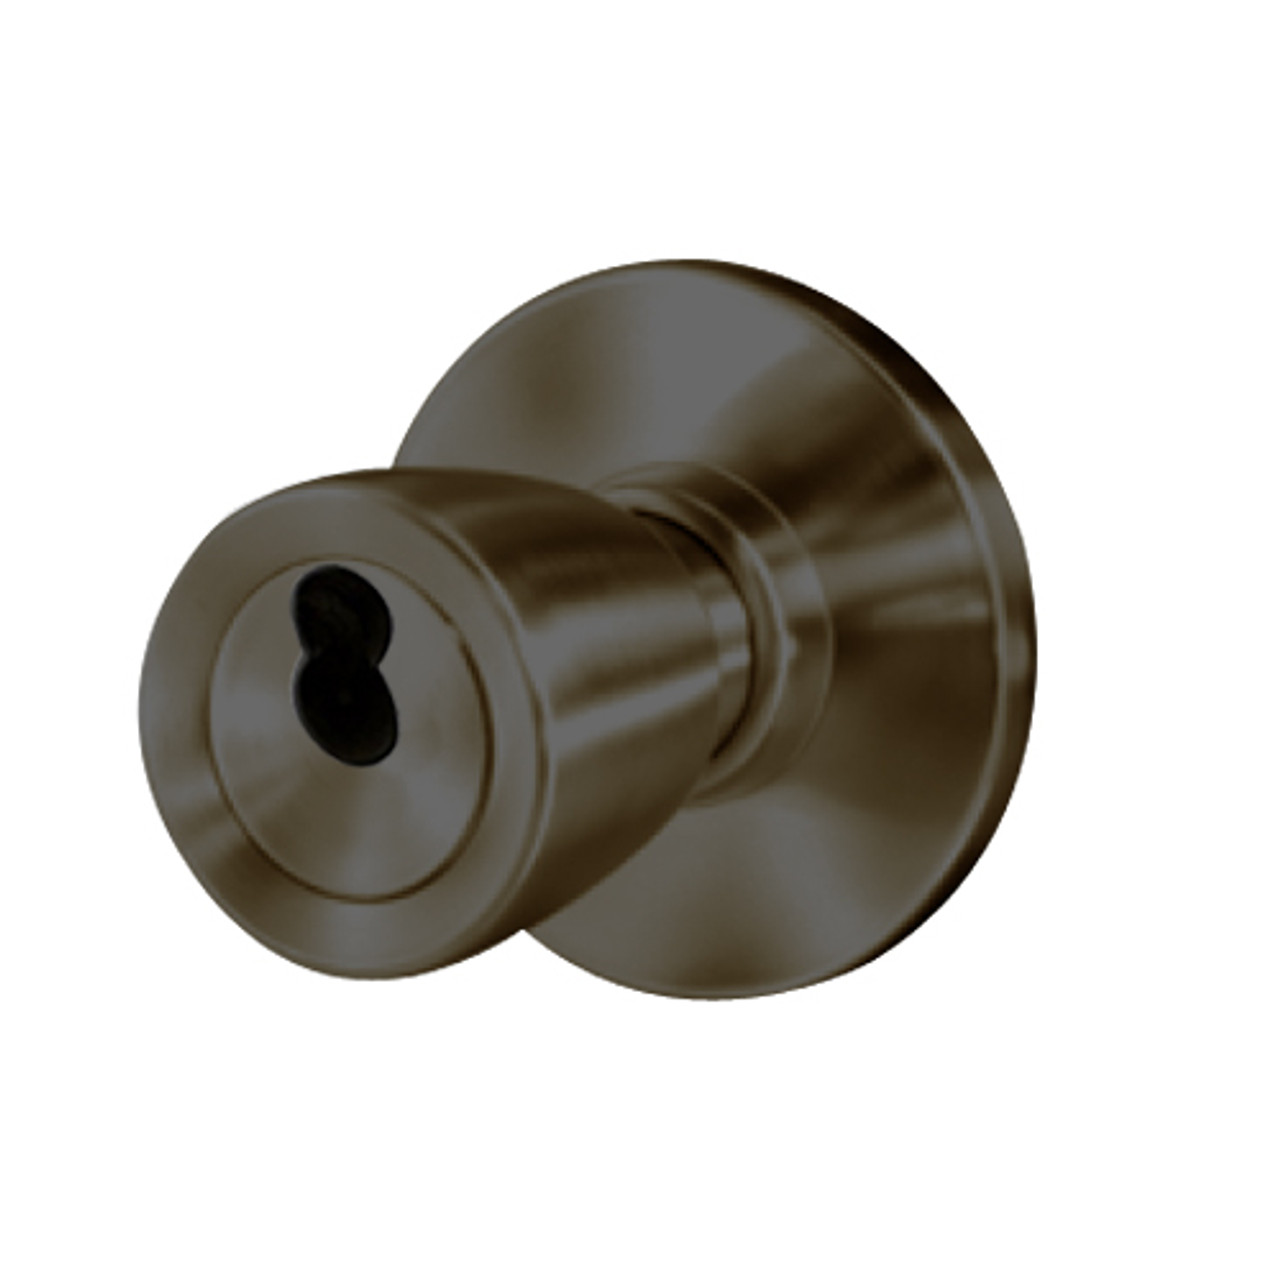 8K37B6ASTK613 Best 8K Series Office Heavy Duty Cylindrical Knob Locks with Tulip Style in Oil Rubbed Bronze